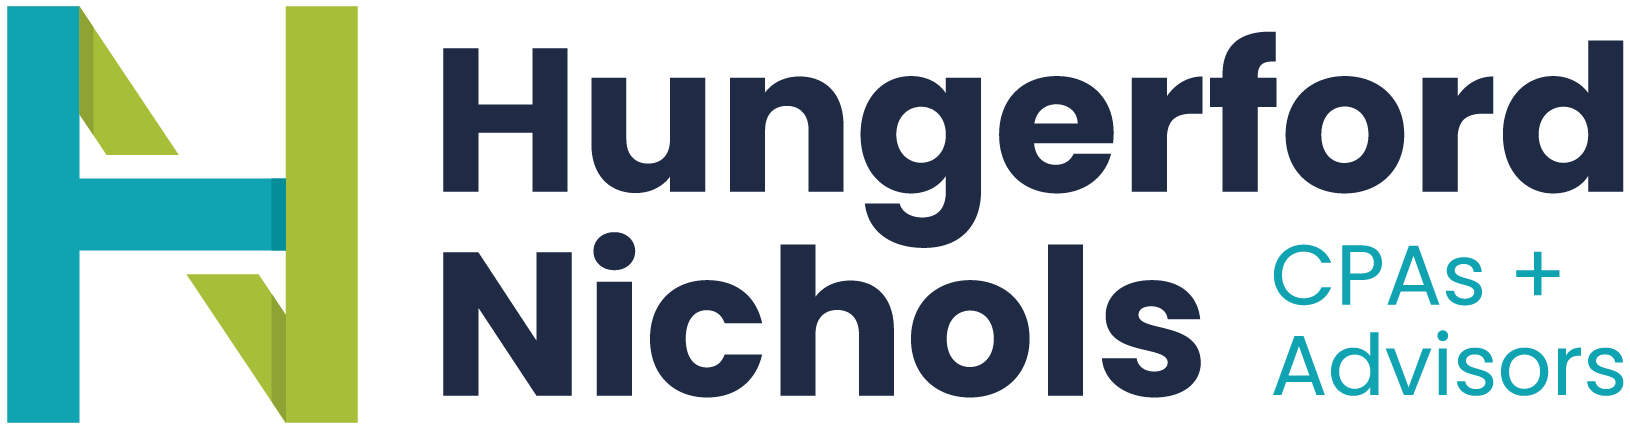 Hungerford Nichols CPA + Advisors Logo